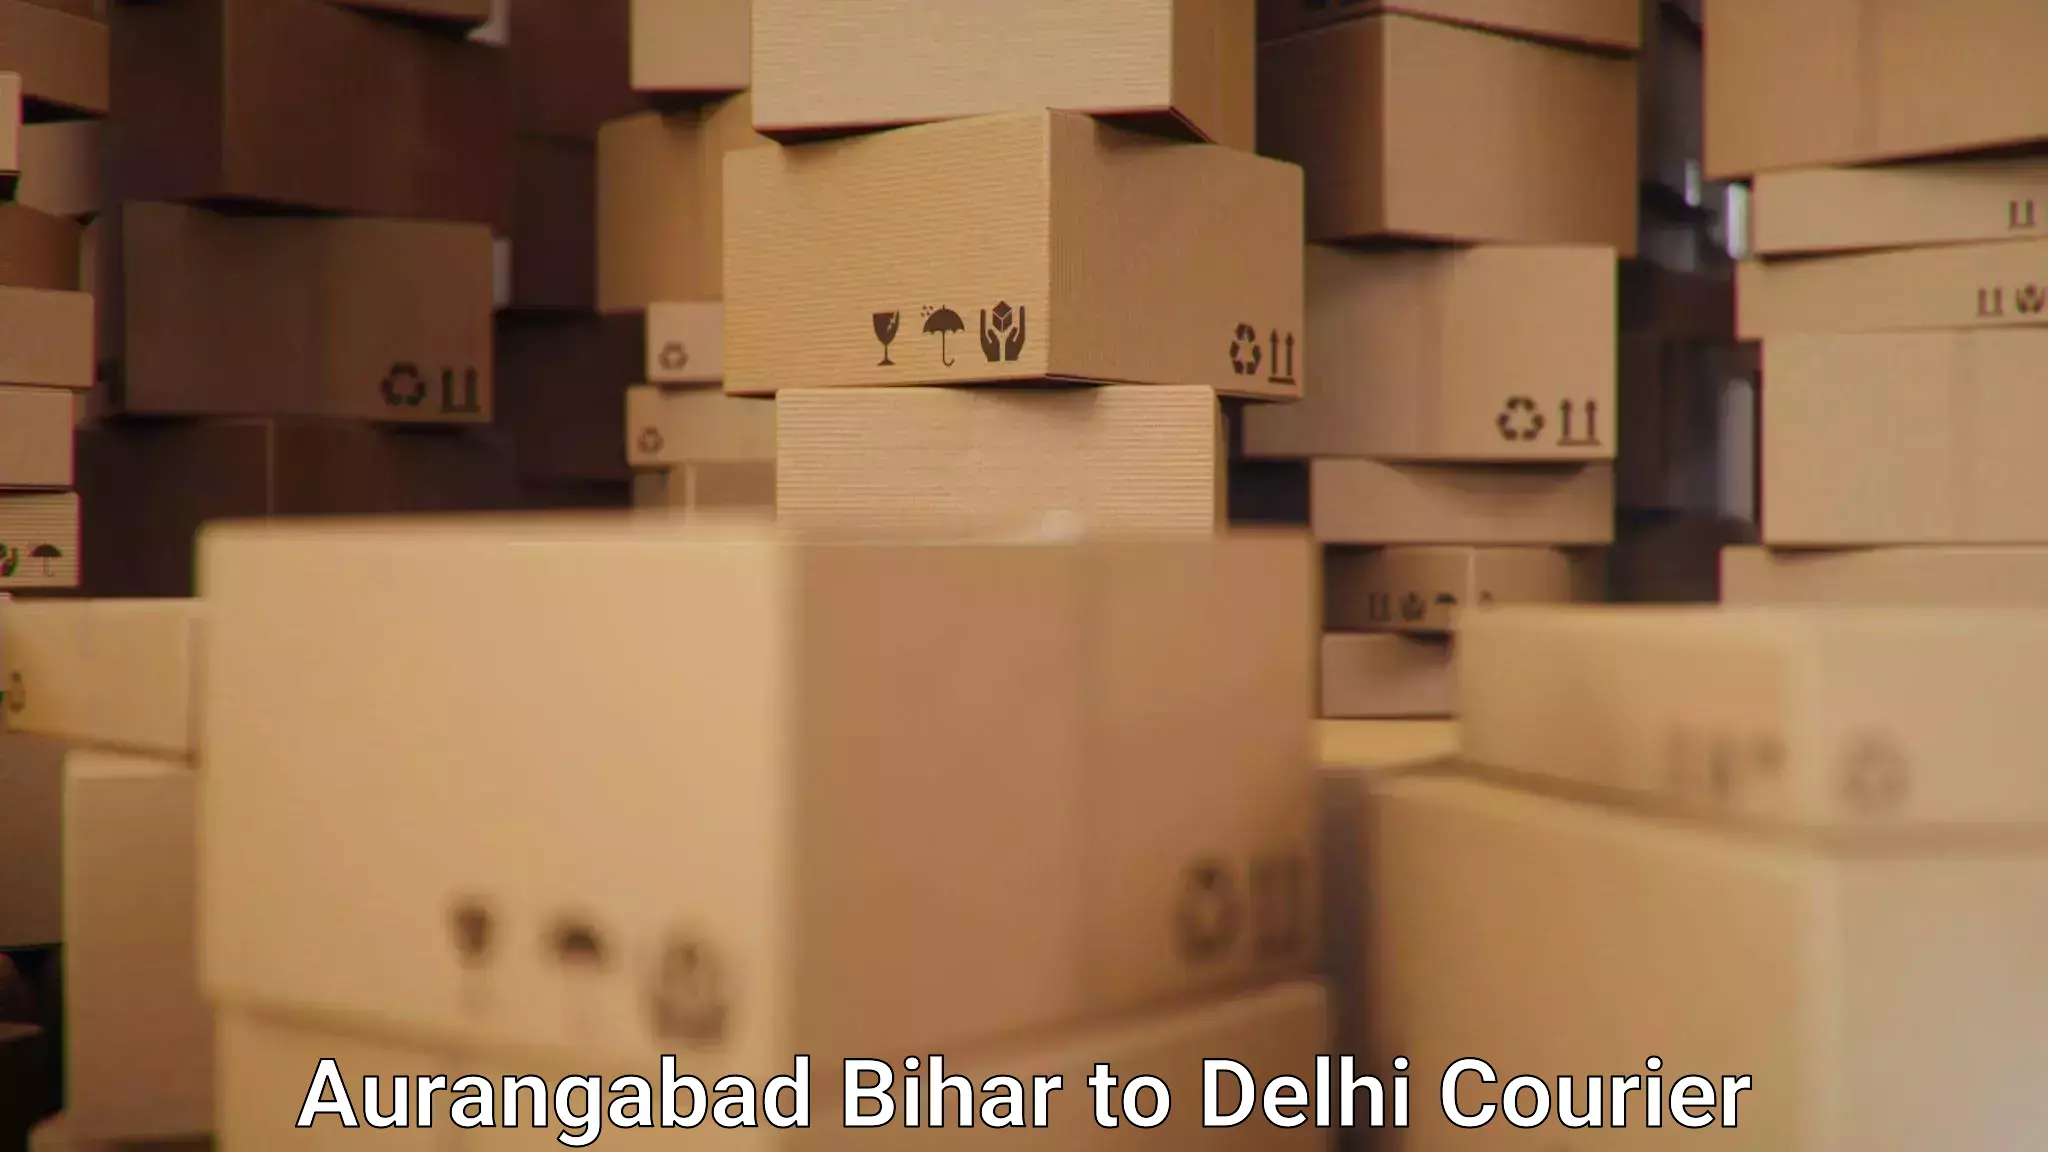 User-friendly delivery service Aurangabad Bihar to NCR